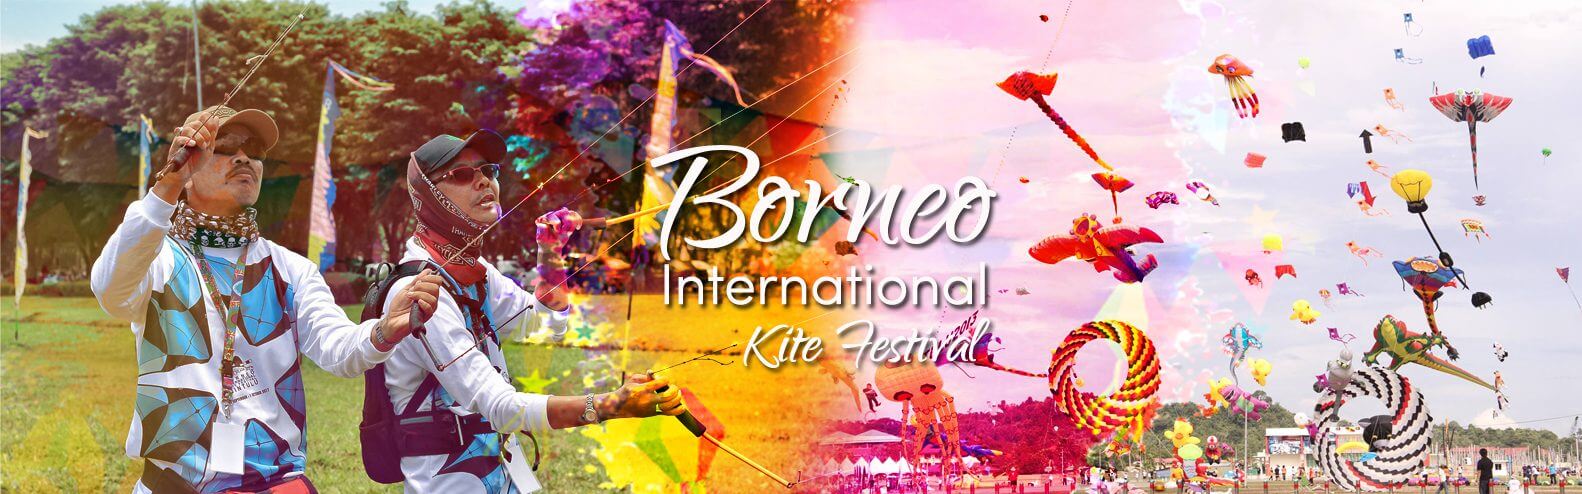 Borneo International Kite Festival 2018